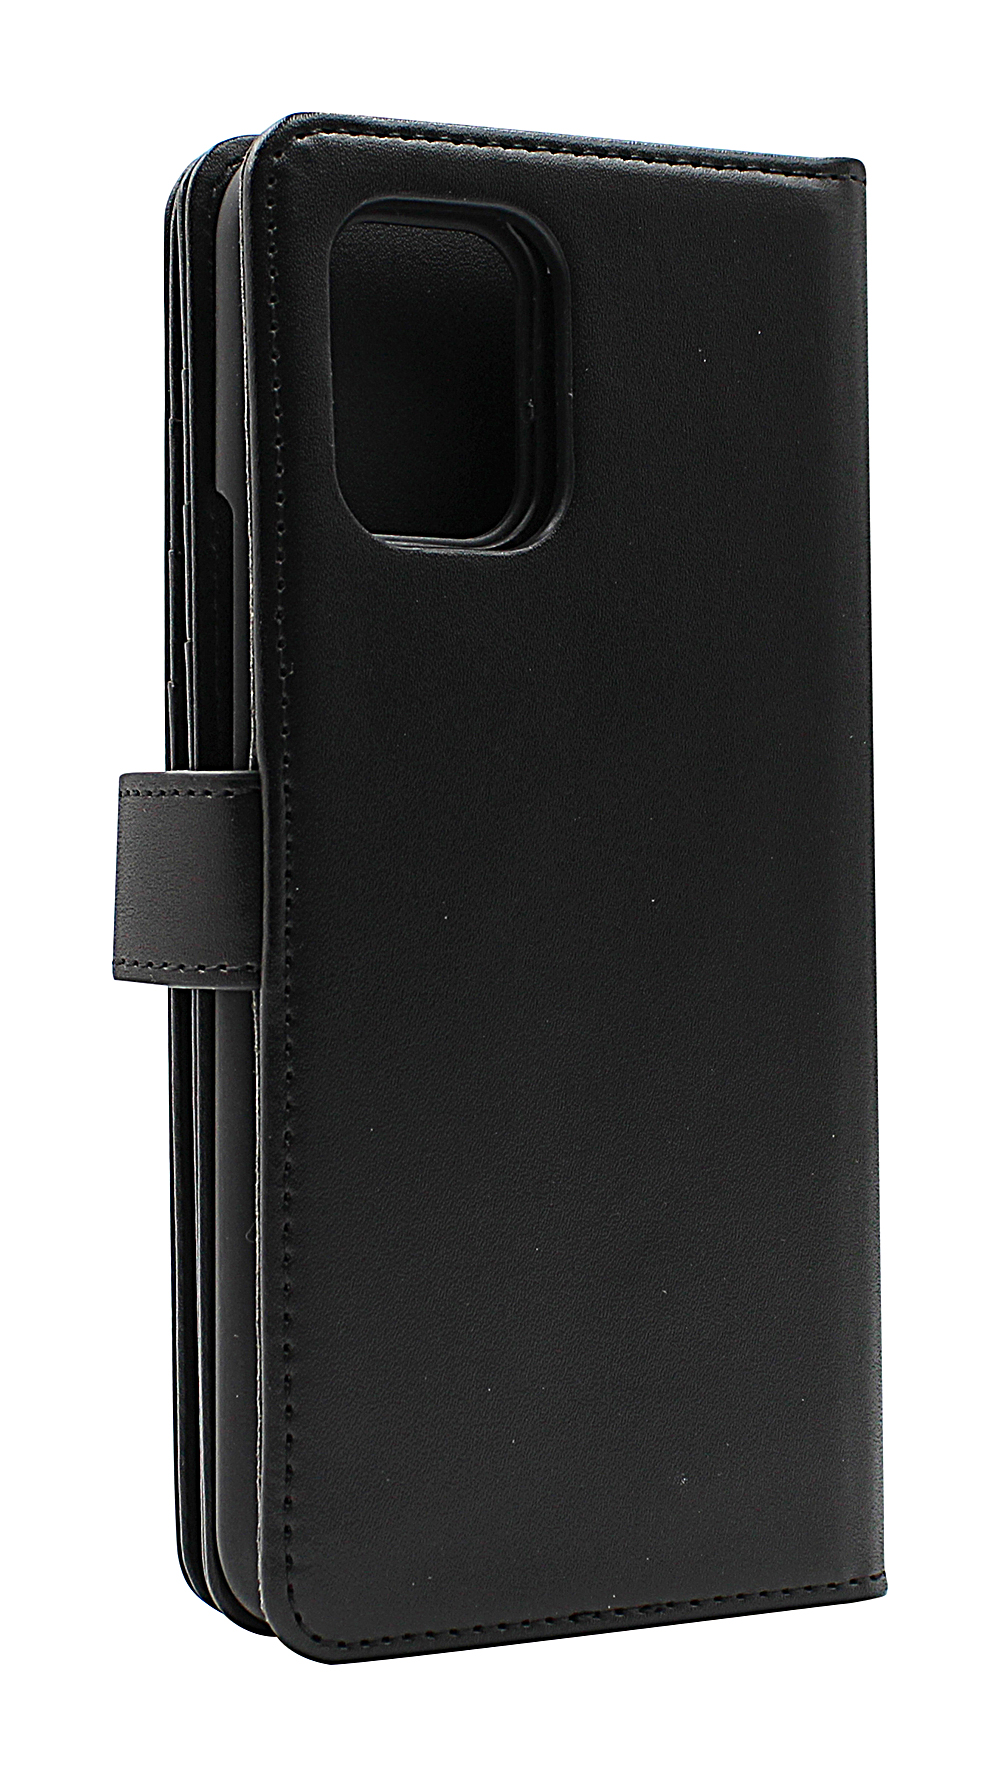 Skimblocker XL Magnet Wallet Xiaomi Mi 10 Lite